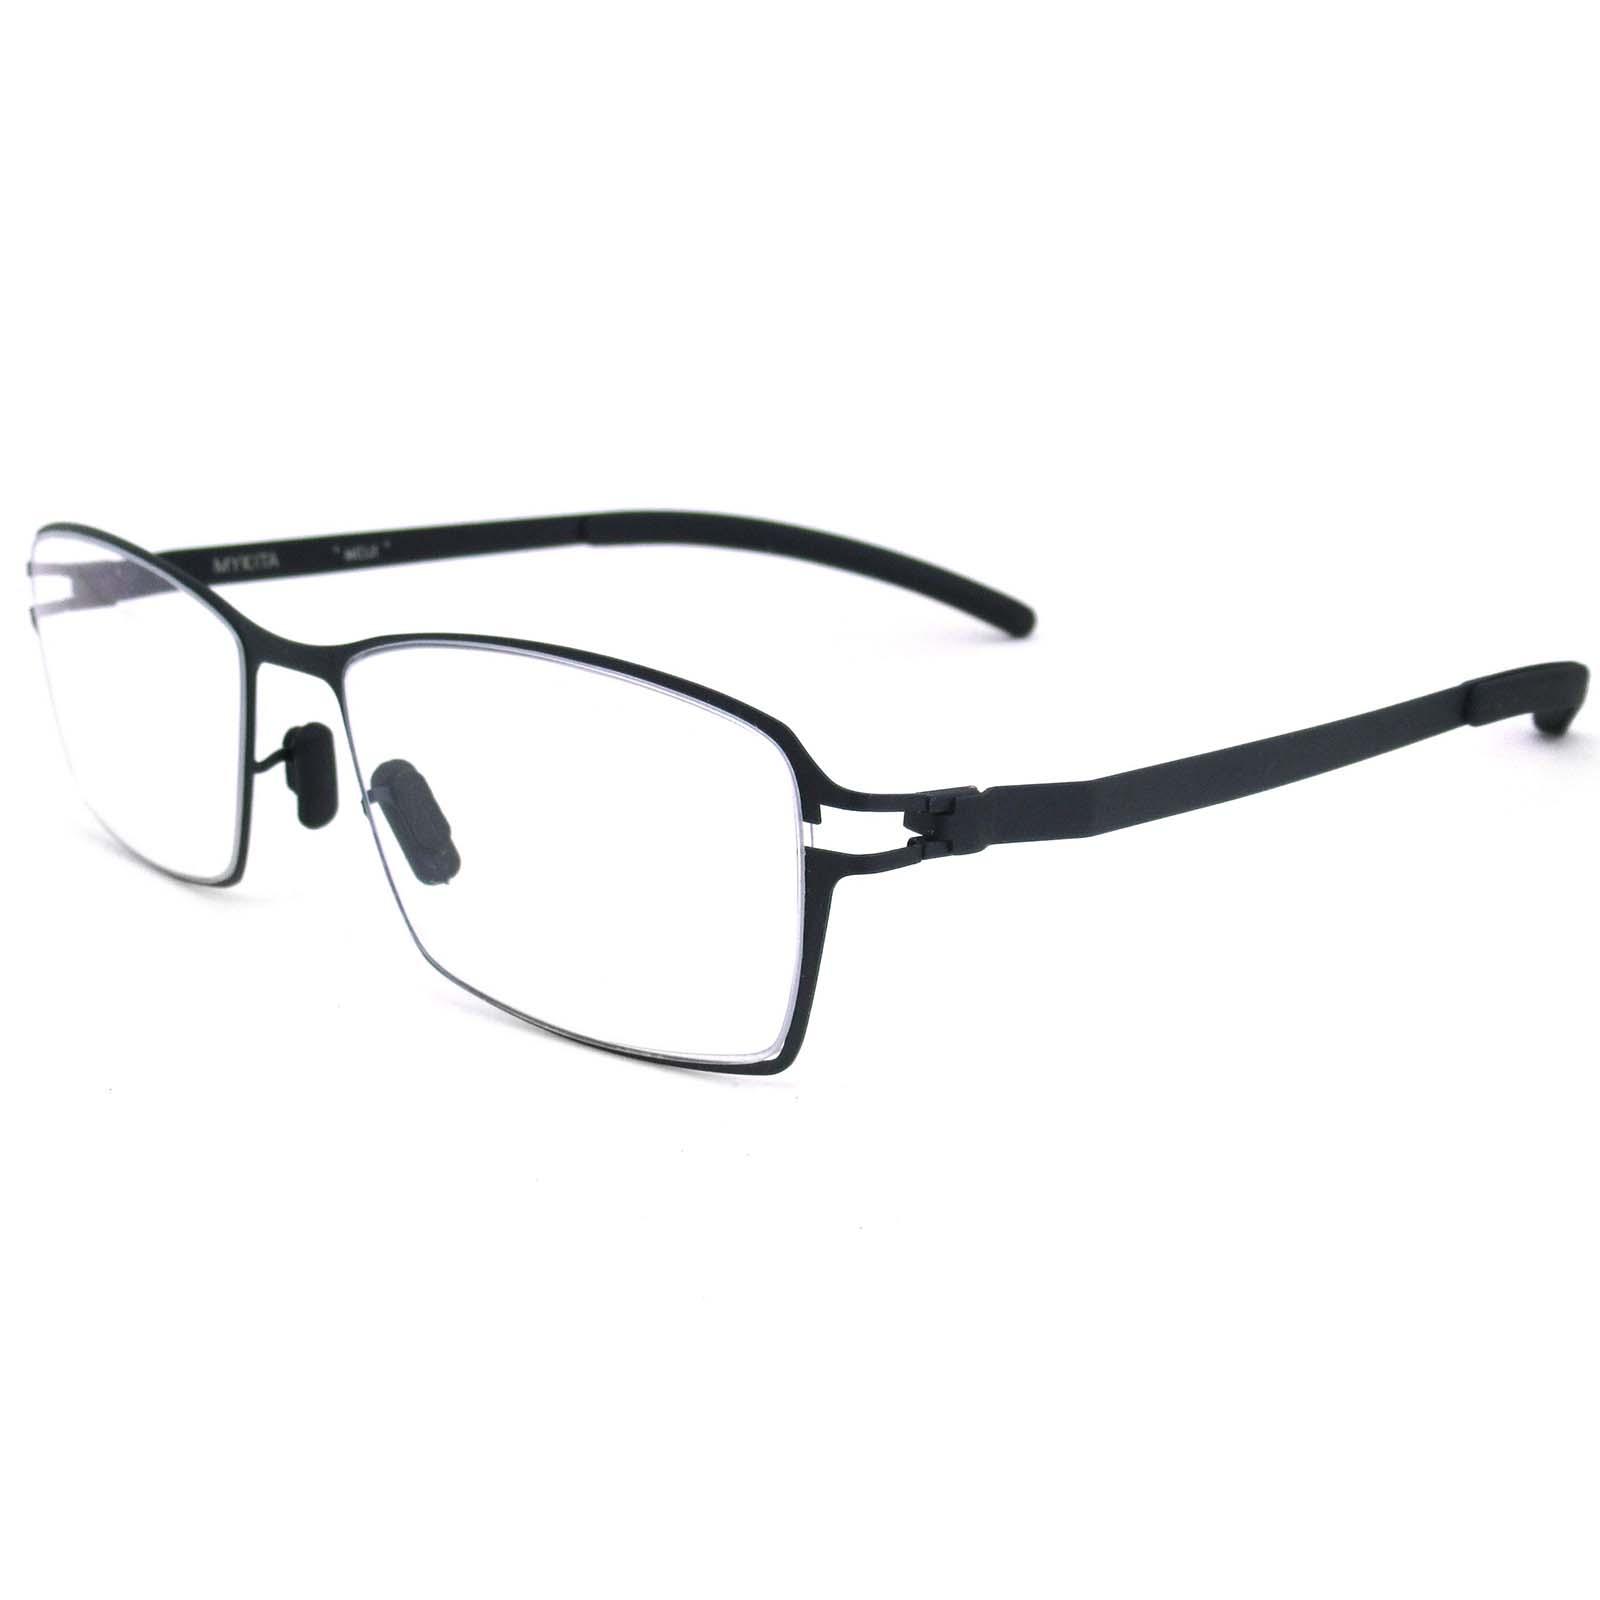 Fashion ISSEY MIYAKE แว่นตา ไม่ใช้น็อต รุ่น 30093 สีดำ MATERIAL GERMANY กรอบแว่นตา ( สำหรับตัดเลนส์ ) ไม่ใช้น็อต วัสดุ สแตนเลสสตีล หรือเหล็กกล้าไร้สนิม Stainless Steel ขาข้อต่อ กรอบแว่นตา EyewearTop Glasses